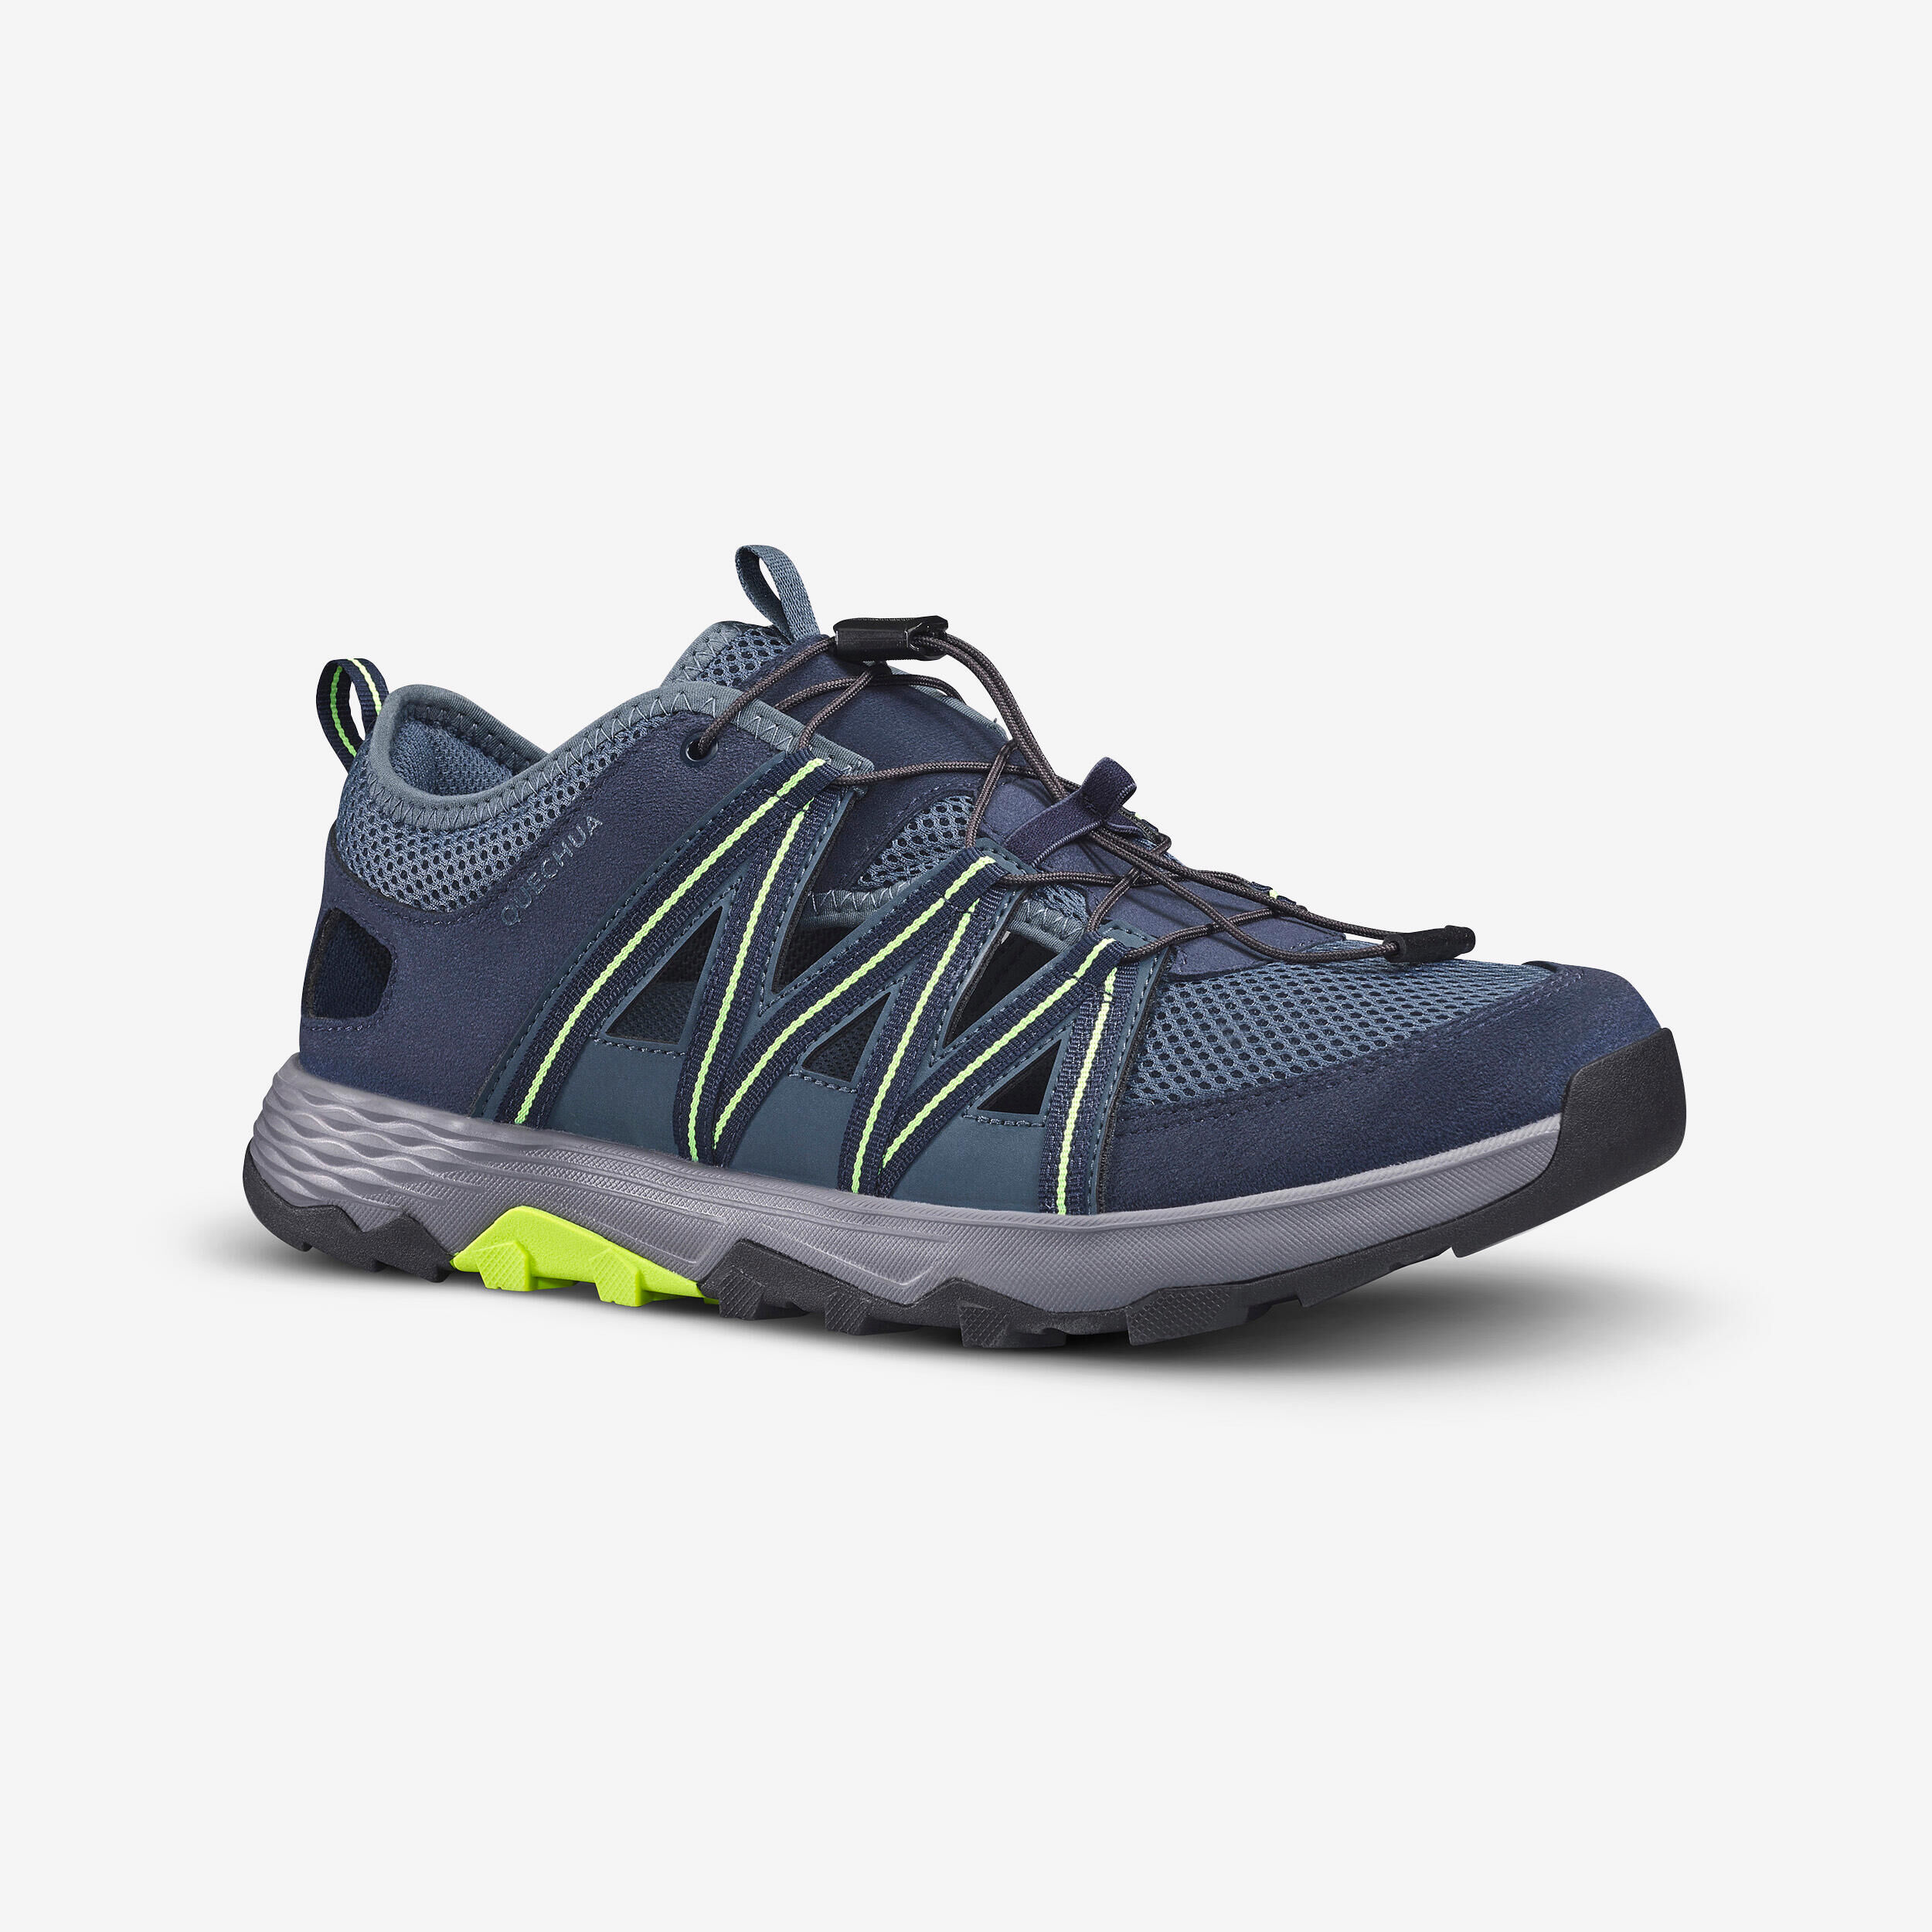 QUECHUA Men’s Hiking Sandal Shoes NH900 Fresh